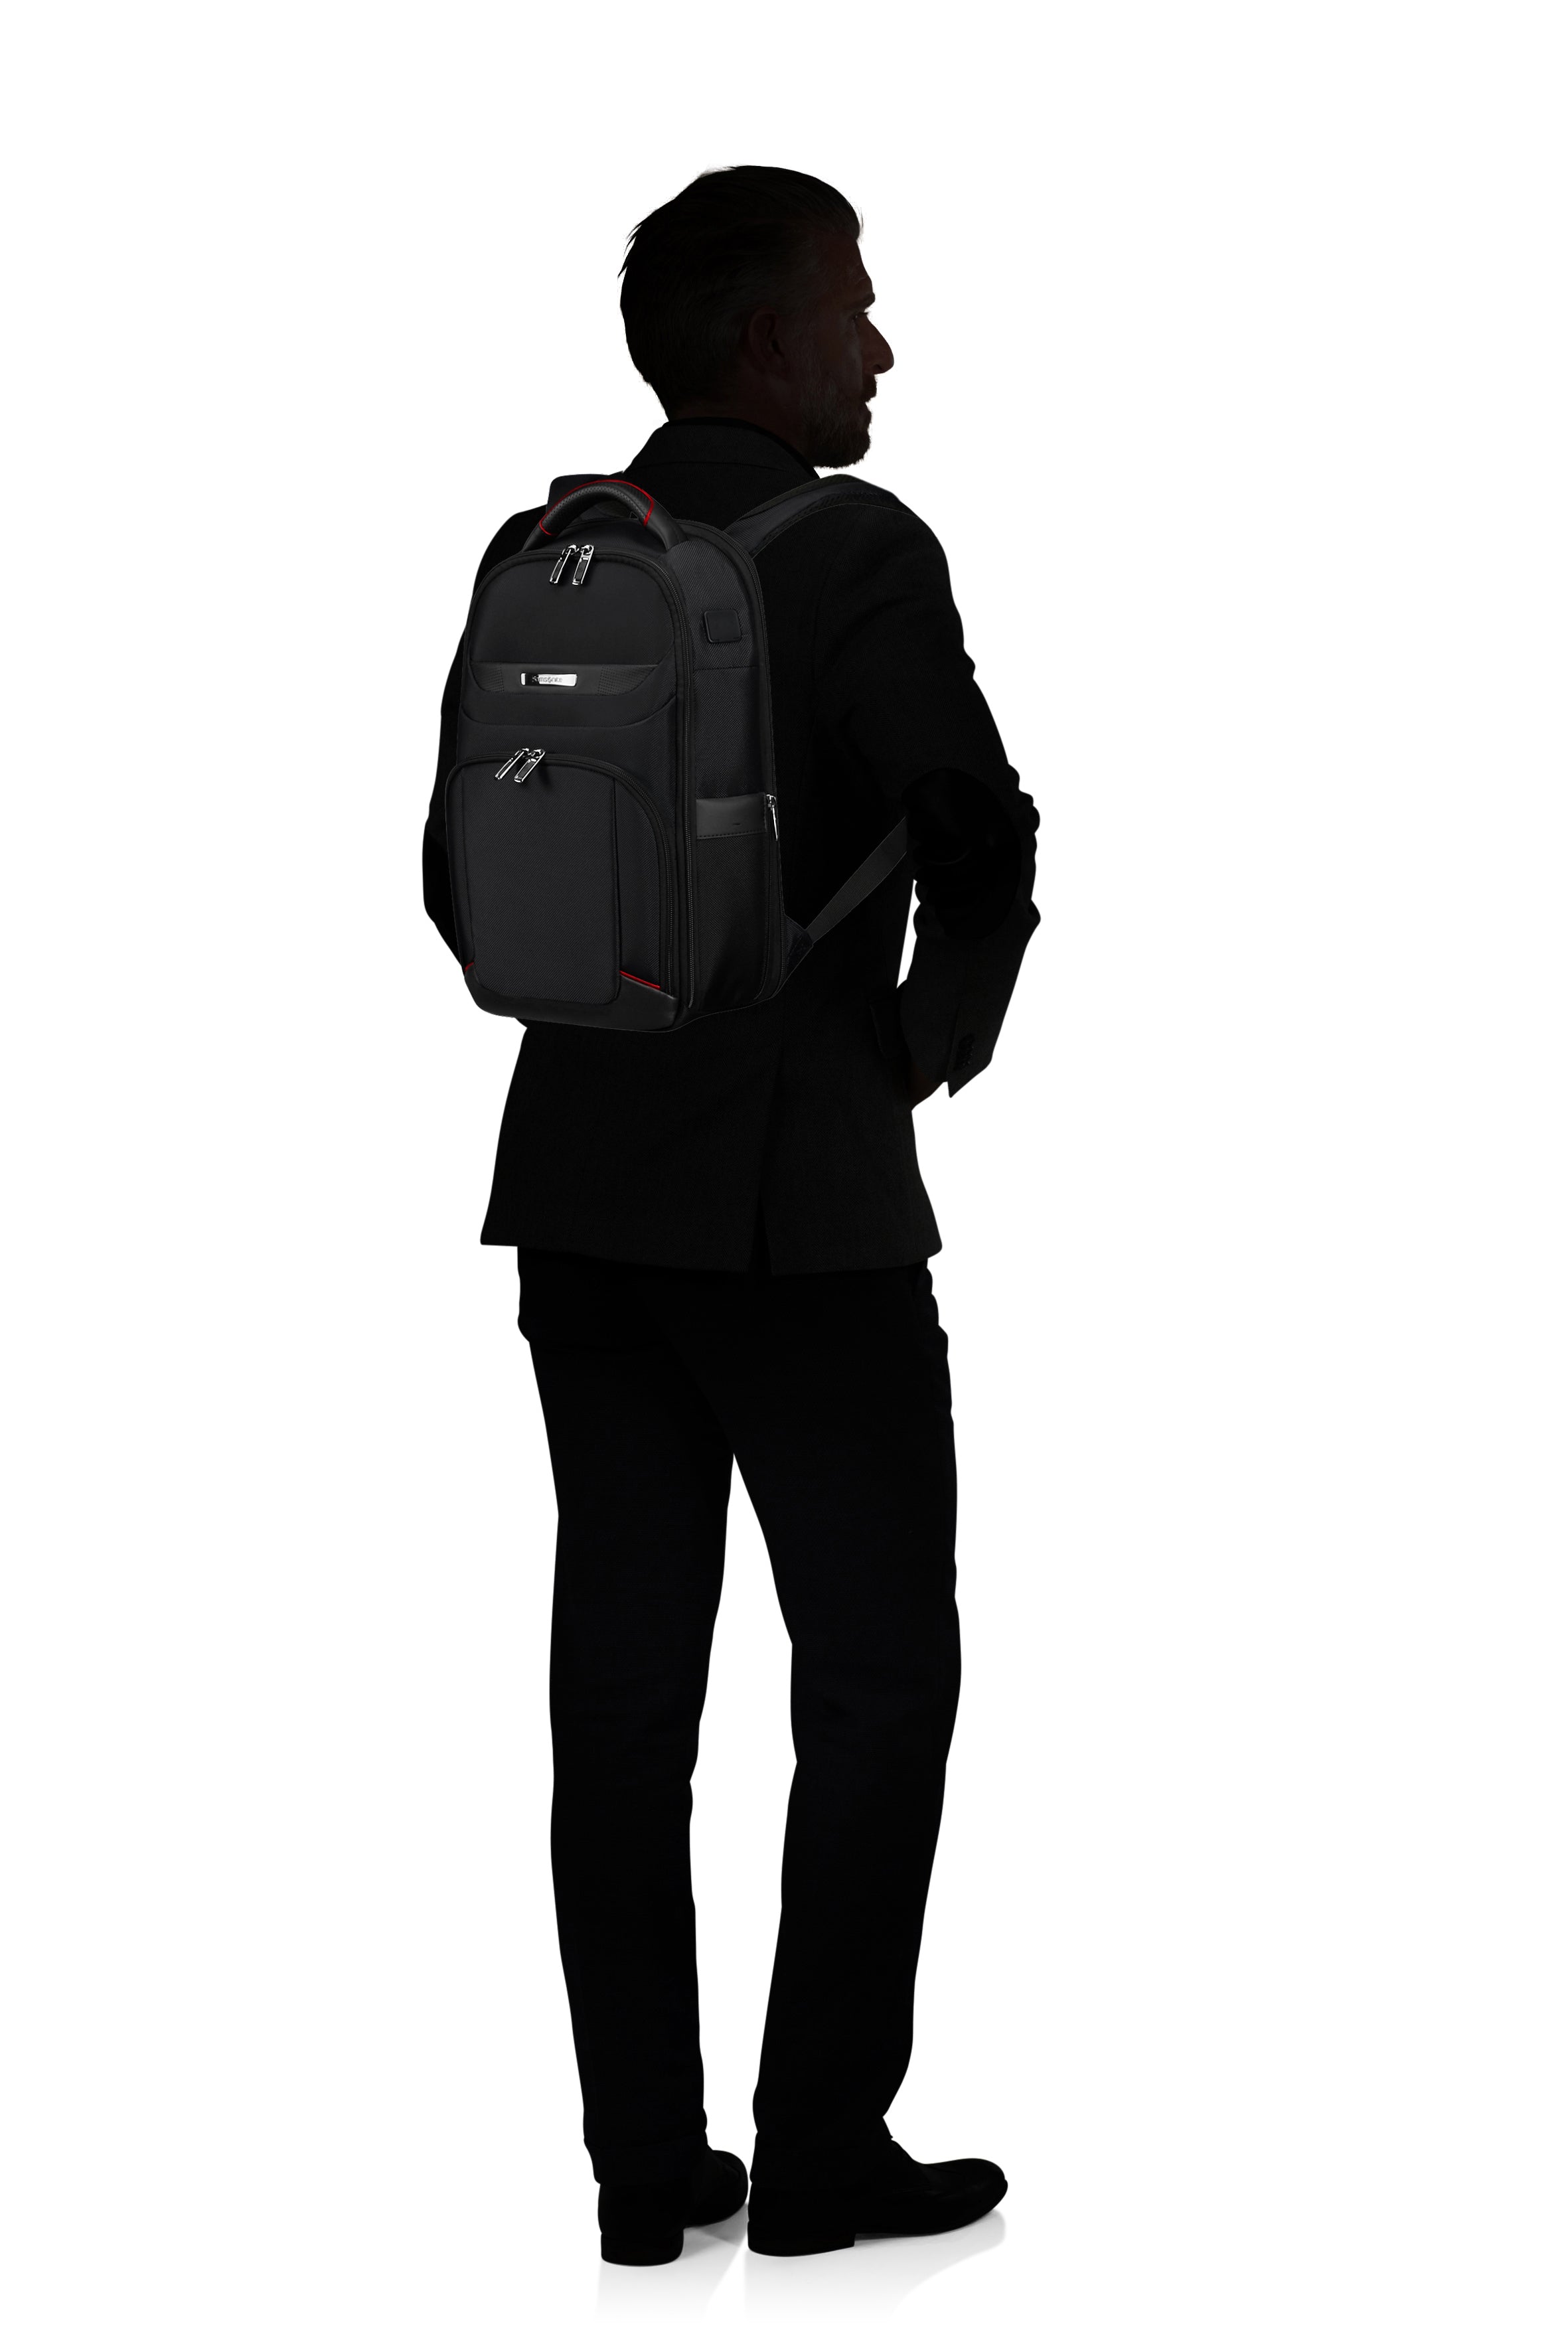 Samsonite PRO-DLX 6 - 14.1 Backpack